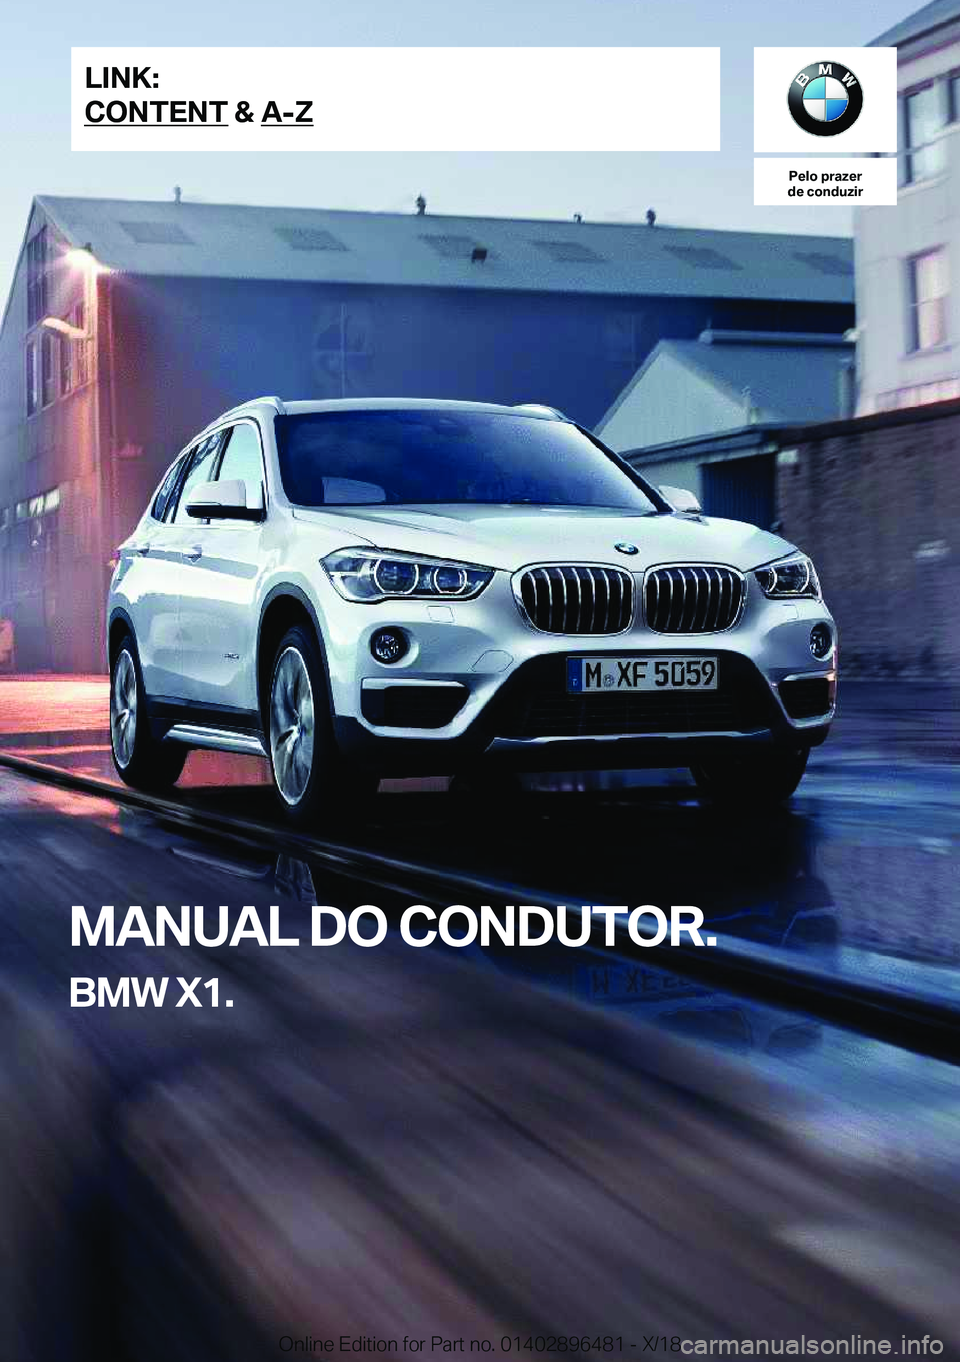 BMW X1 2019  Manual do condutor (in Portuguese) �P�e�l�o��p�r�a�z�e�r
�d�e��c�o�n�d�u�z�i�r
�M�A�N�U�A�L��D�O��C�O�N�D�U�T�O�R�.
�B�M�W��X�1�.�L�I�N�K�:
�C�O�N�T�E�N�T��&��A�-�Z�O�n�l�i�n�e��E�d�i�t�i�o�n��f�o�r��P�a�r�t��n�o�.��0�1�4�0